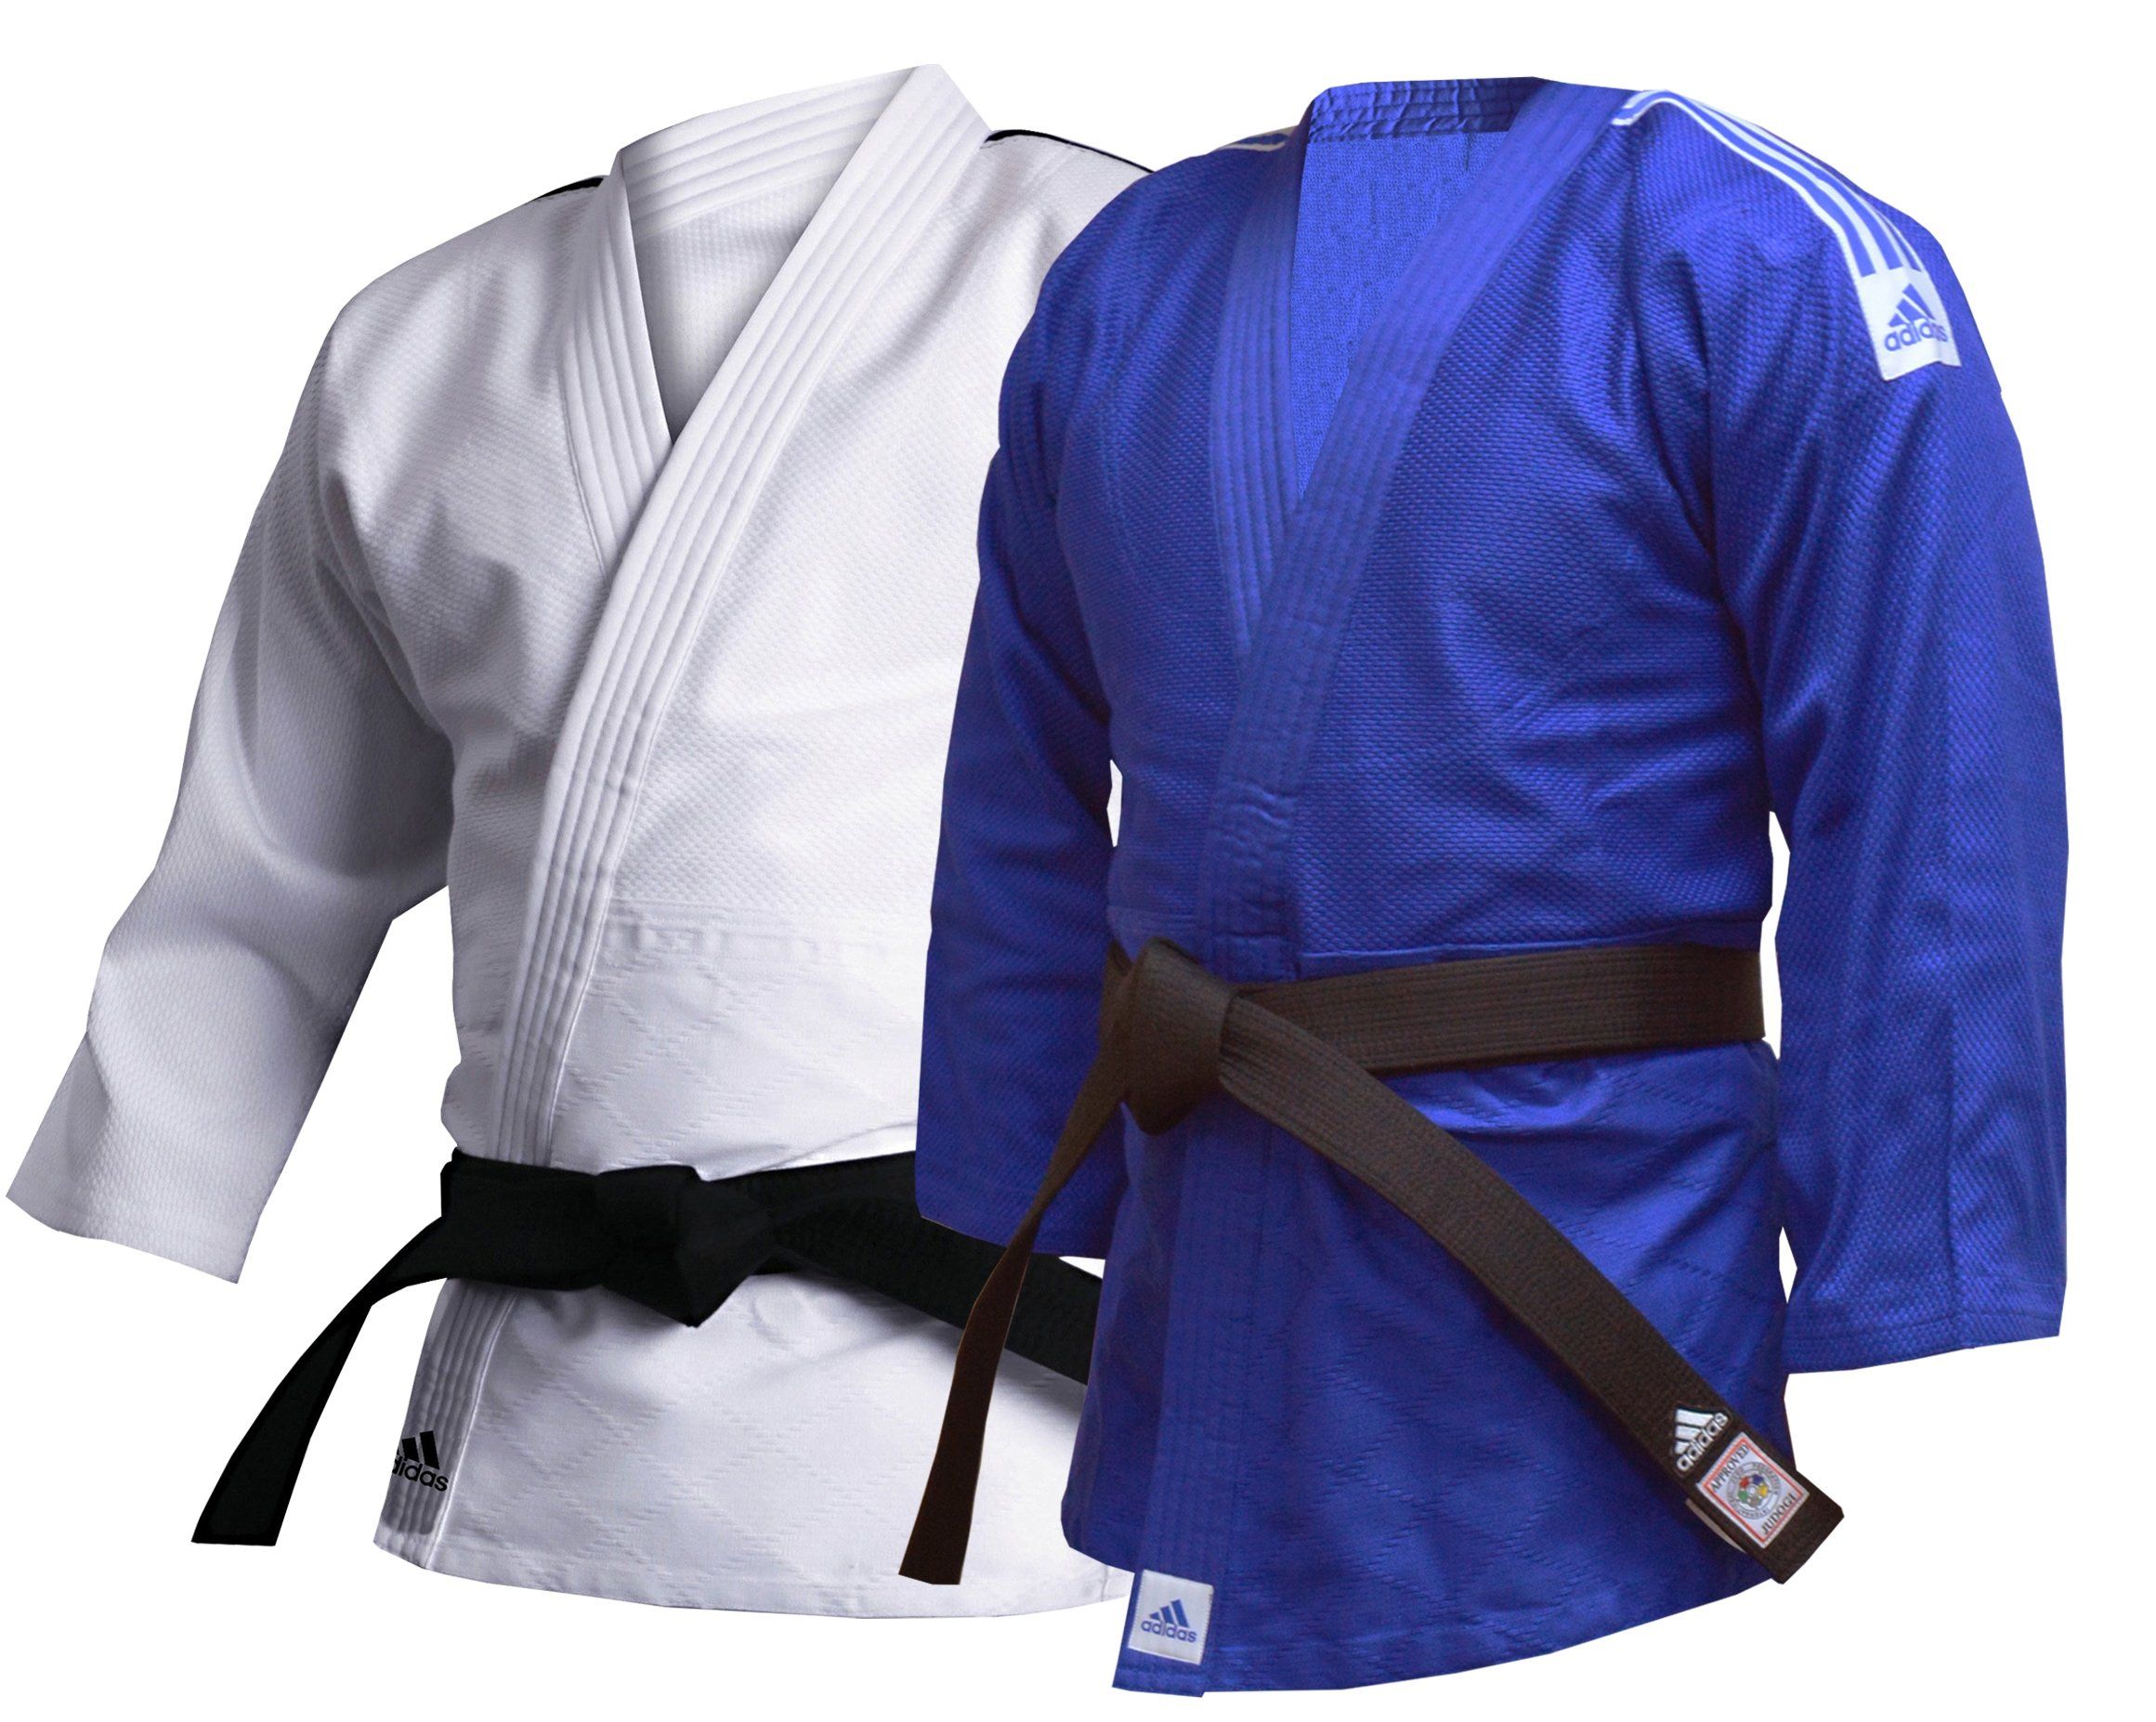 Pensativo bestia Estadio adidas Training Judo Uniform - 500g